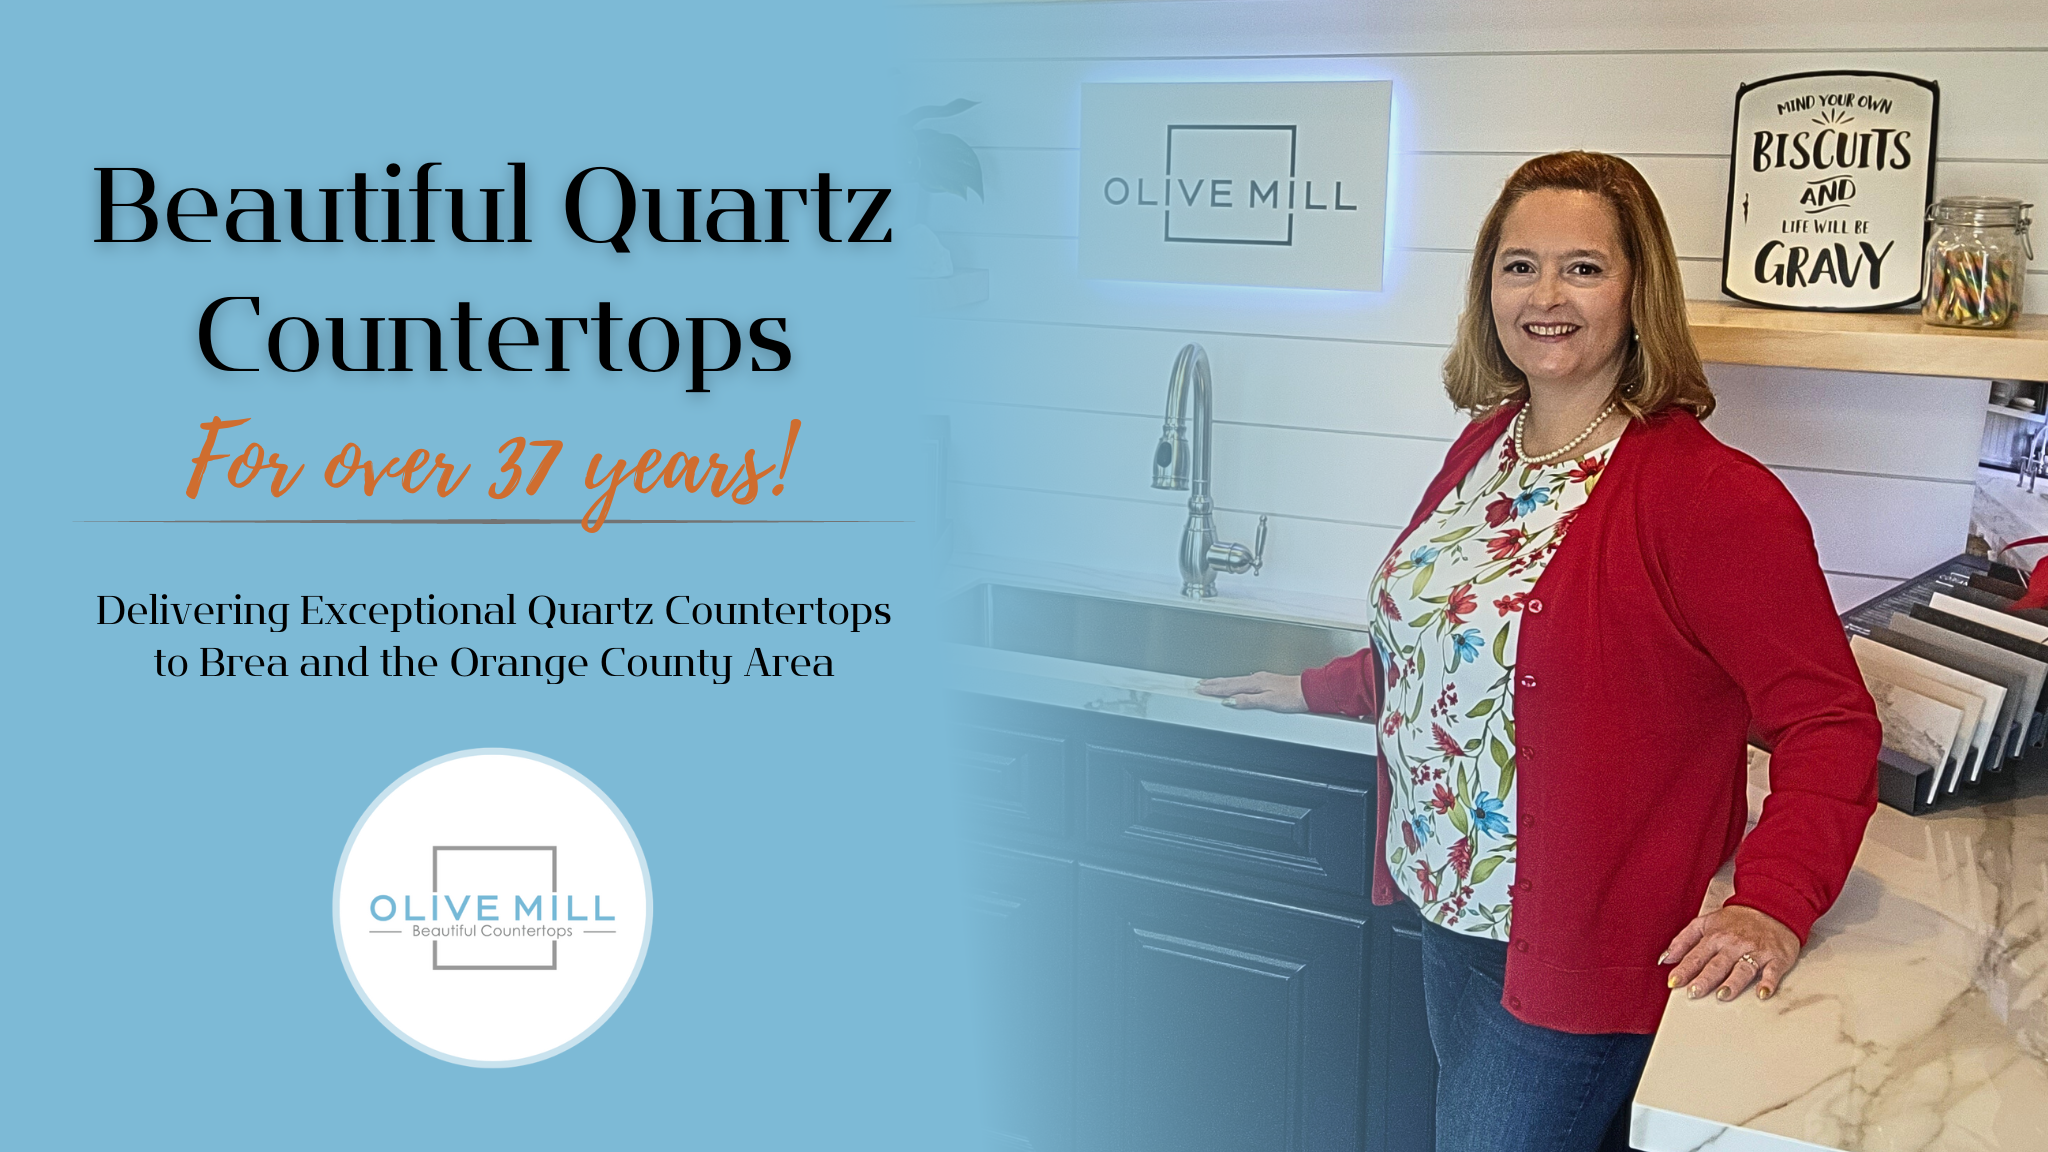 Beautiful Quartz Countertops - Deliverting Exceptional Quartz Countertops to Brea and the Orange County Area for over 37 Years.